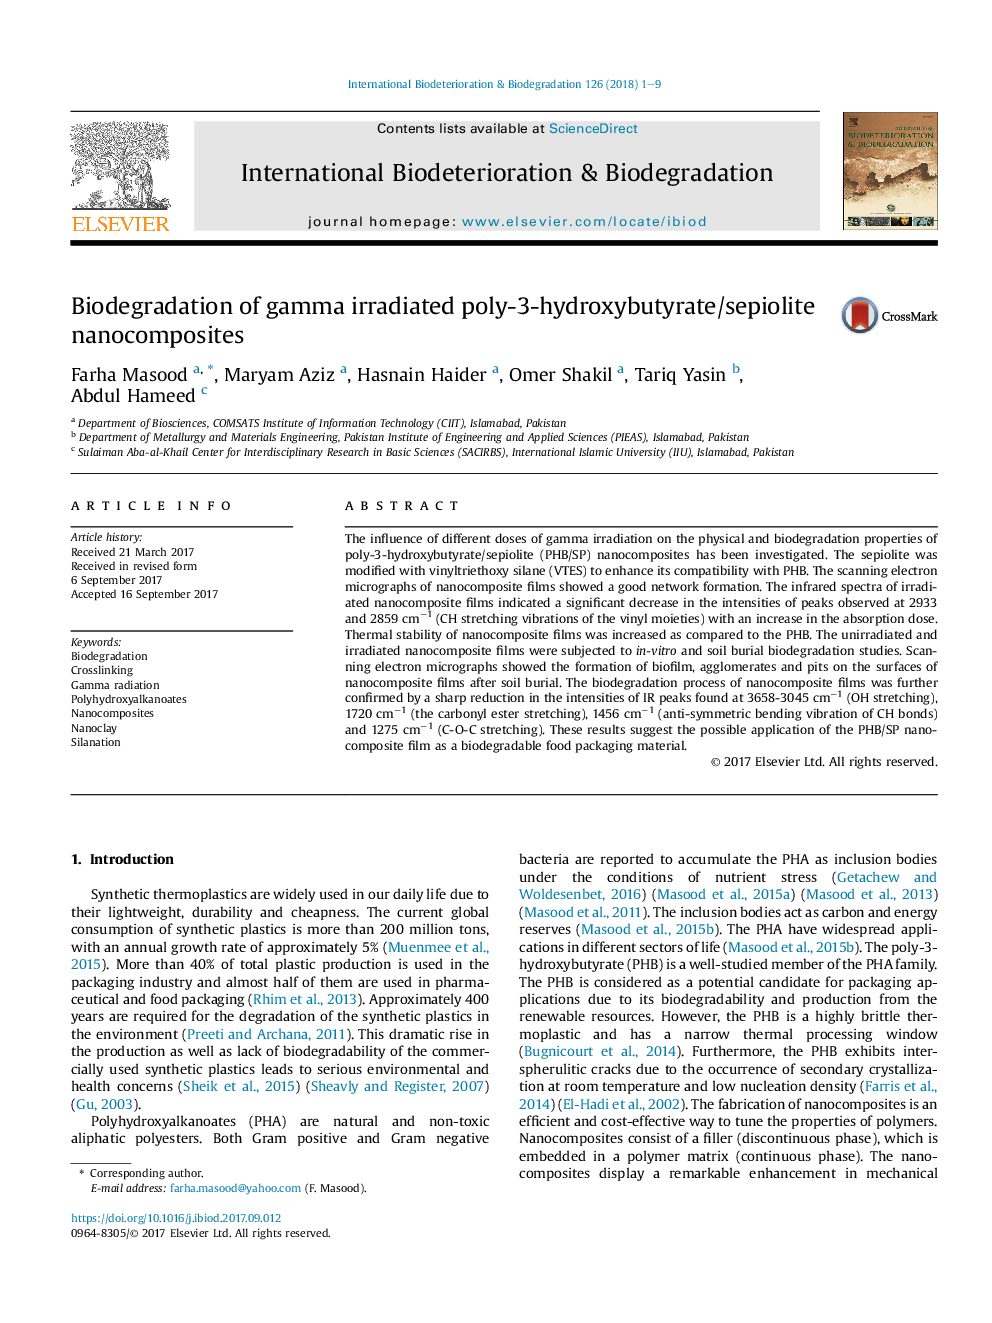 Biodegradation of gamma irradiated poly-3-hydroxybutyrate/sepiolite nanocomposites